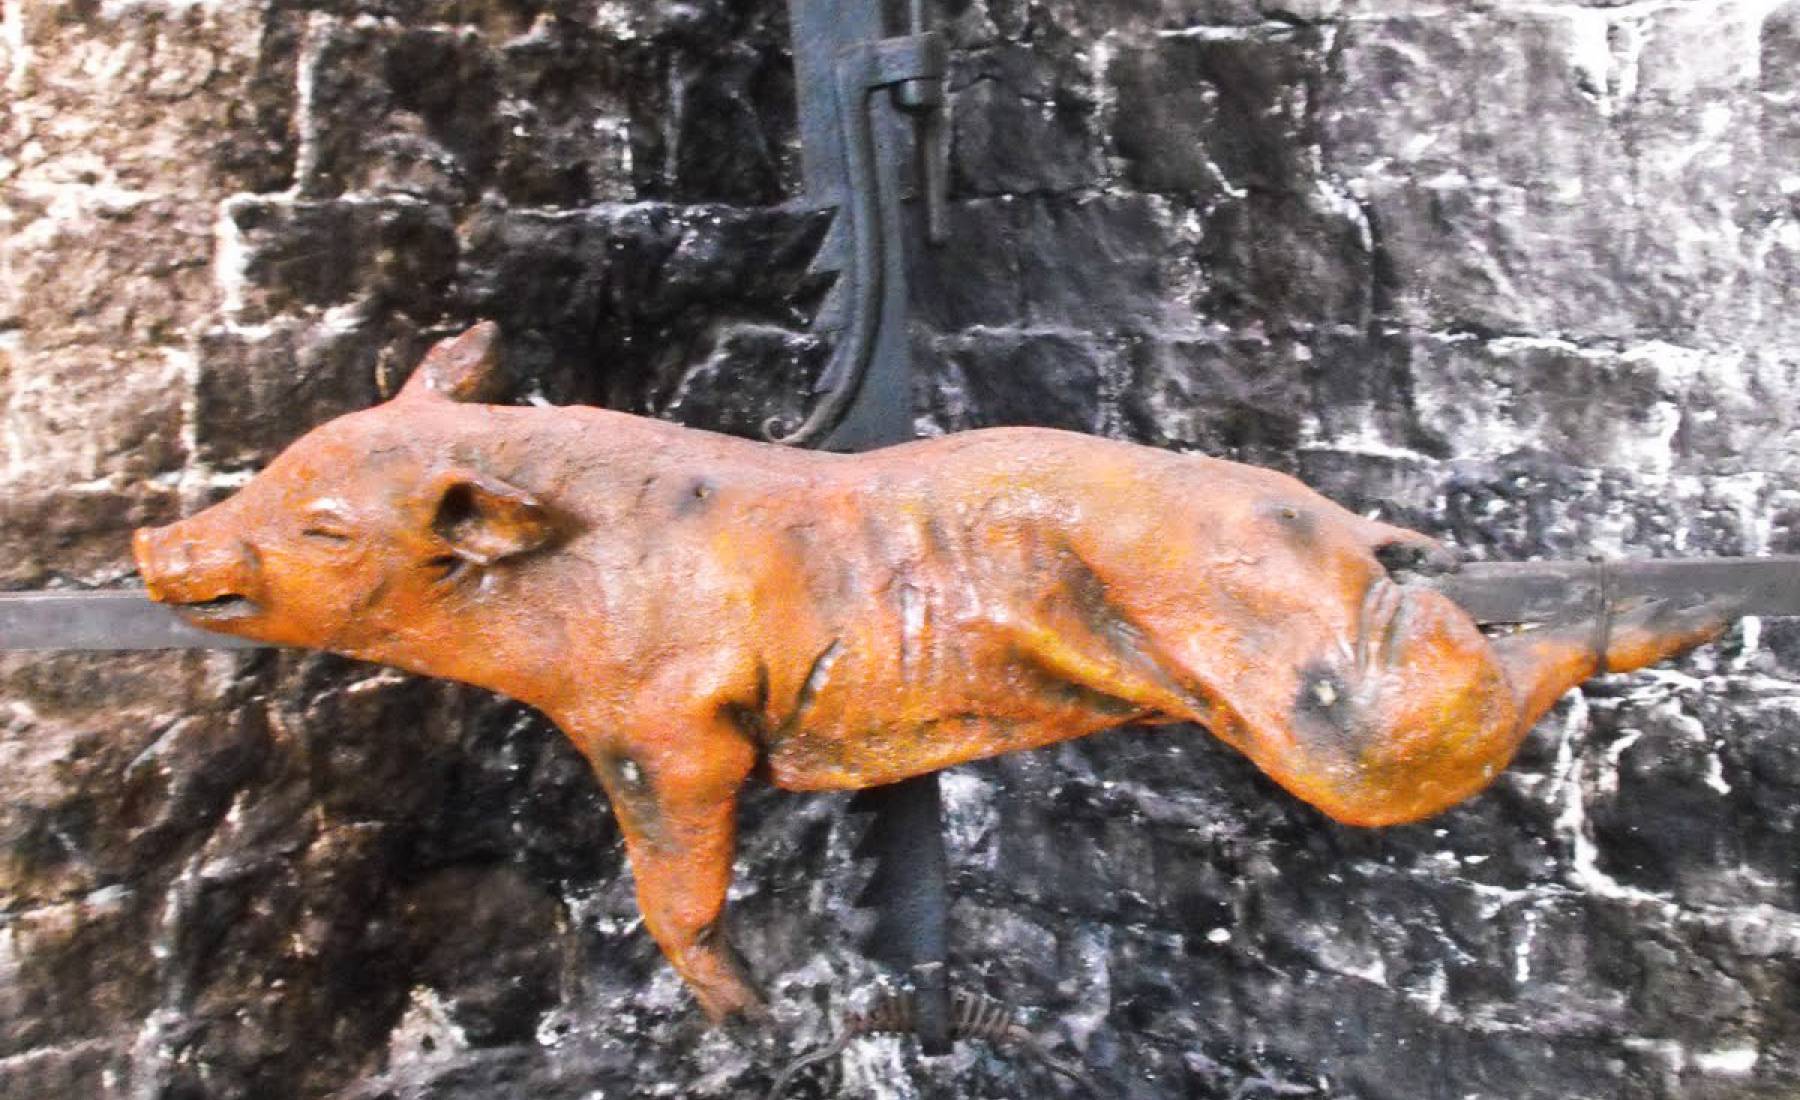 roast pig, glastonbury abbey, medieval kitchen, suckling pig, fake food display, spit roast, crispy